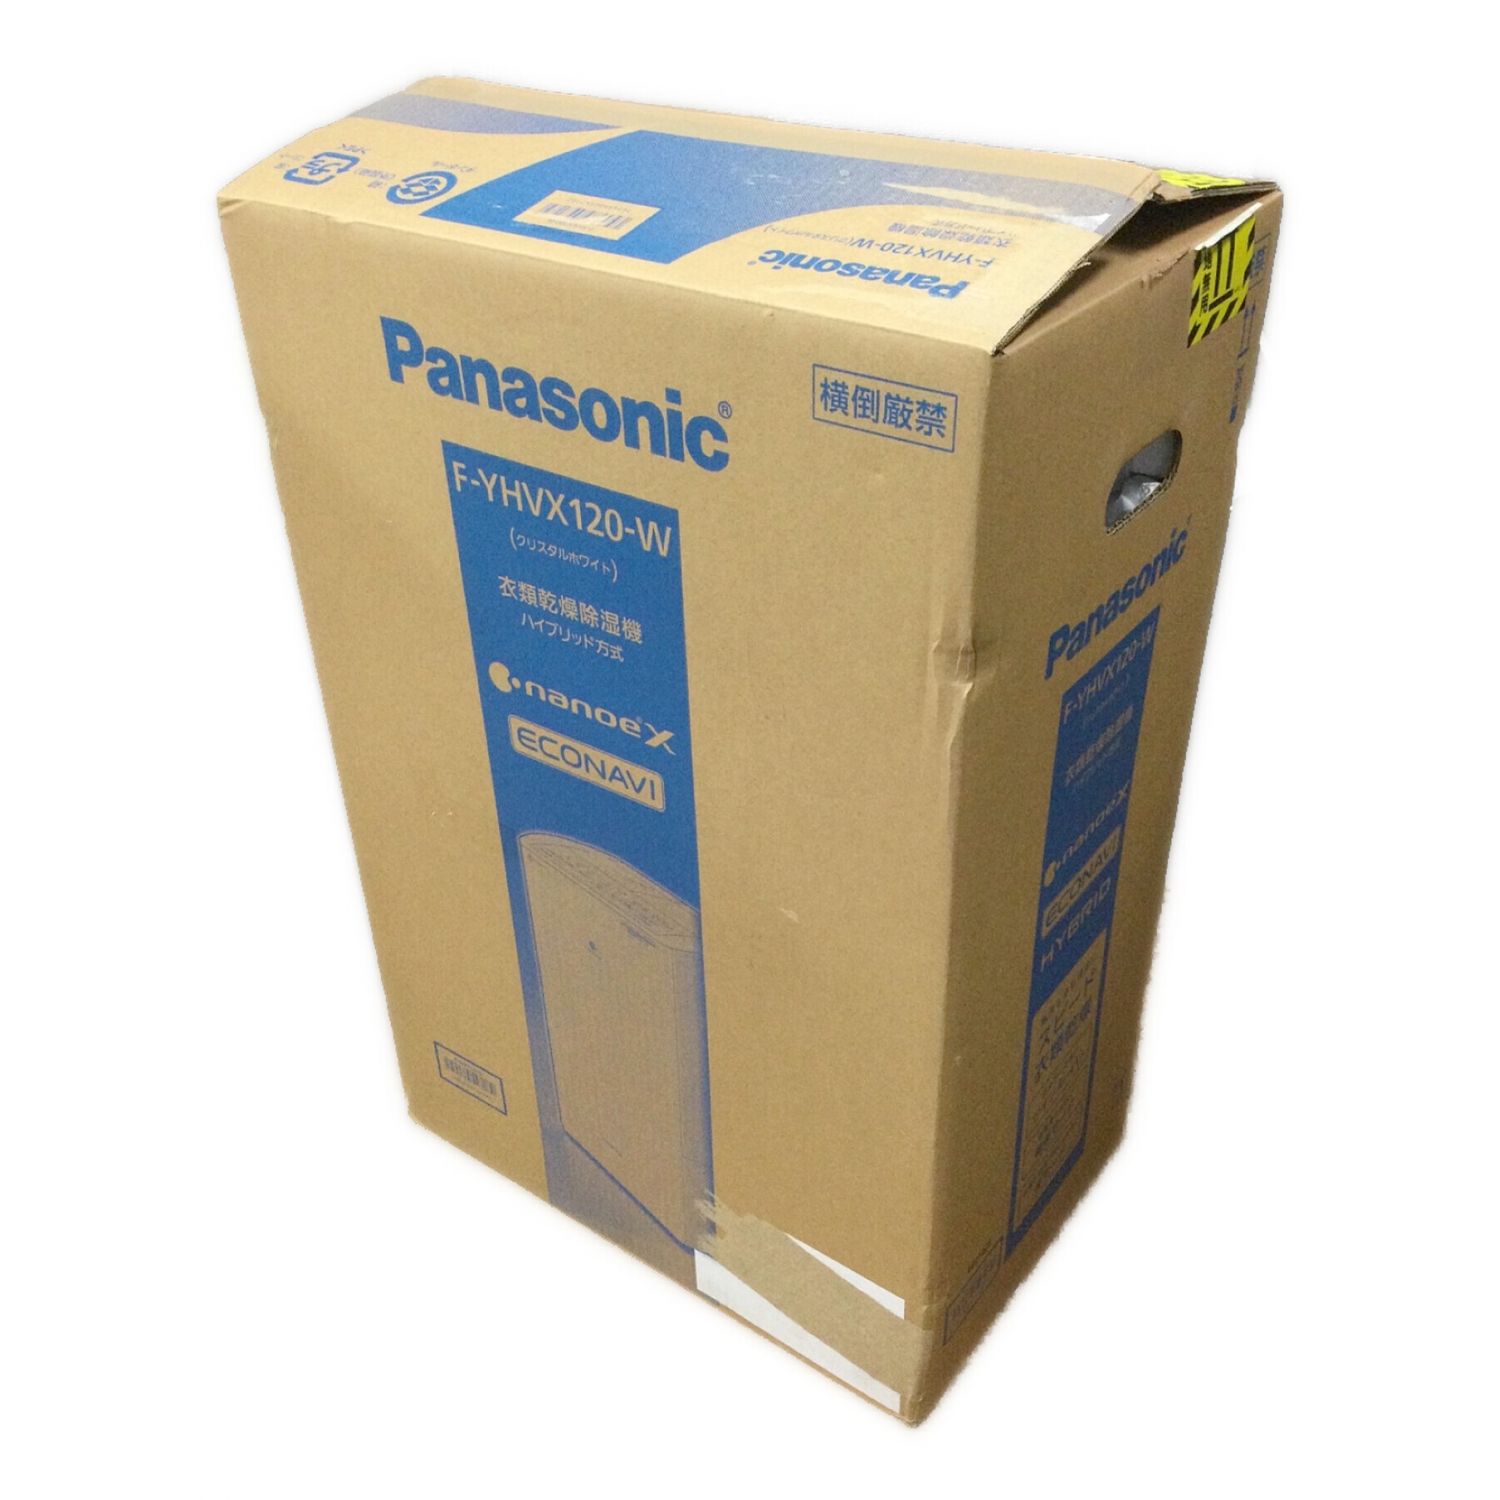 Panasonic (パナソニック) 衣類乾燥除湿機 F-YHVX120-W クリスタル